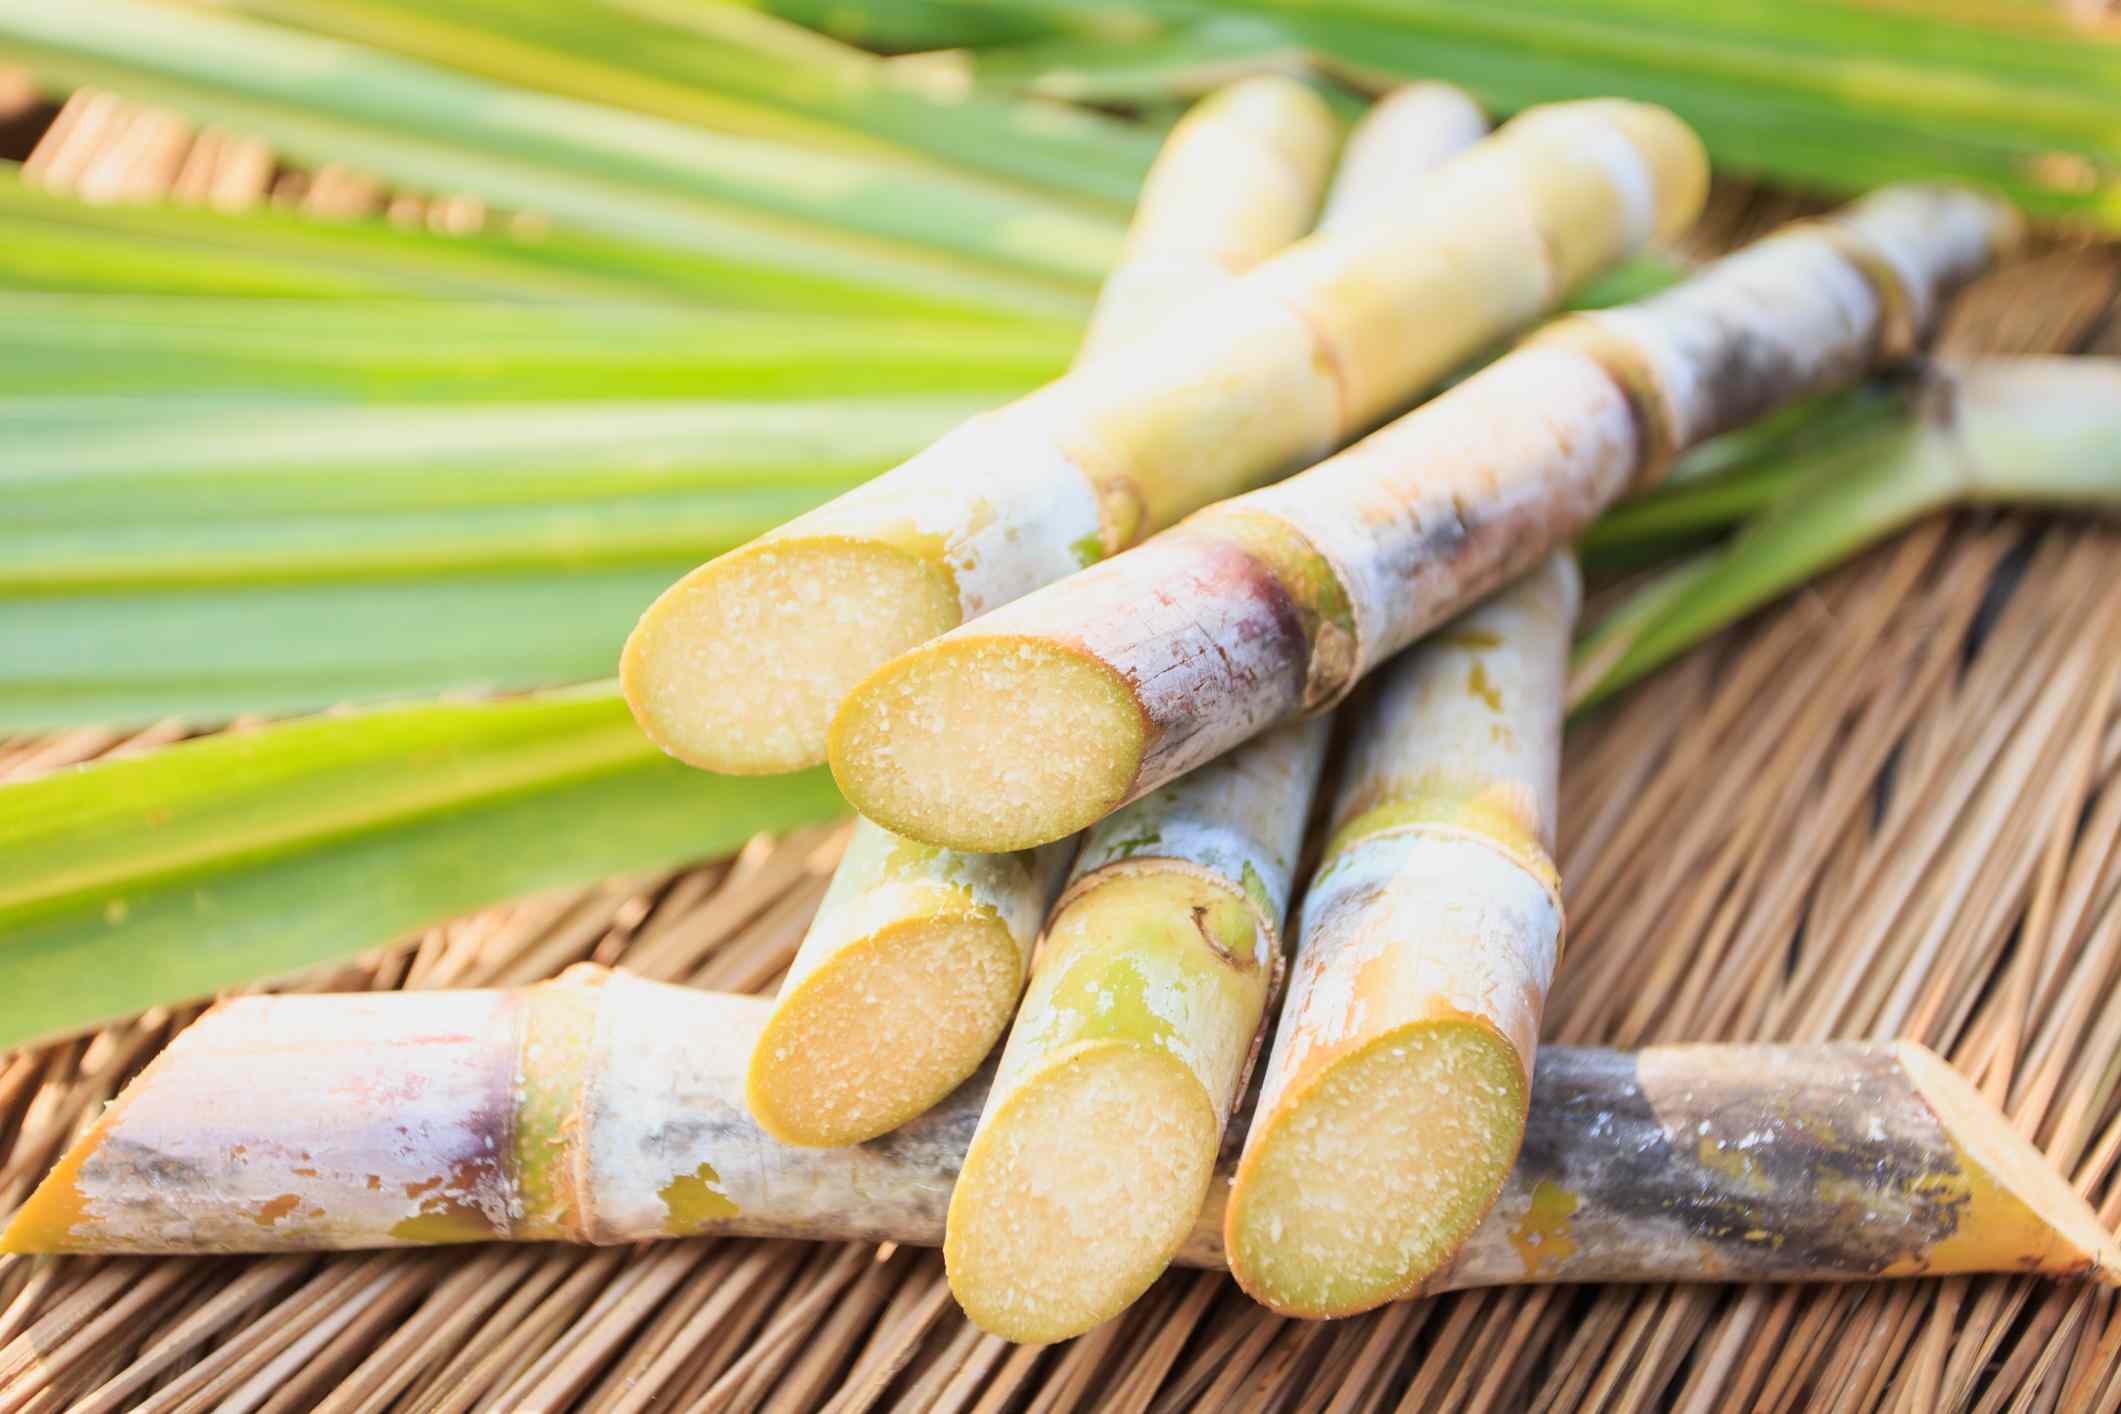 Sugarcane – Industry Strategic Science and Technology Plans (ISPs) Platform